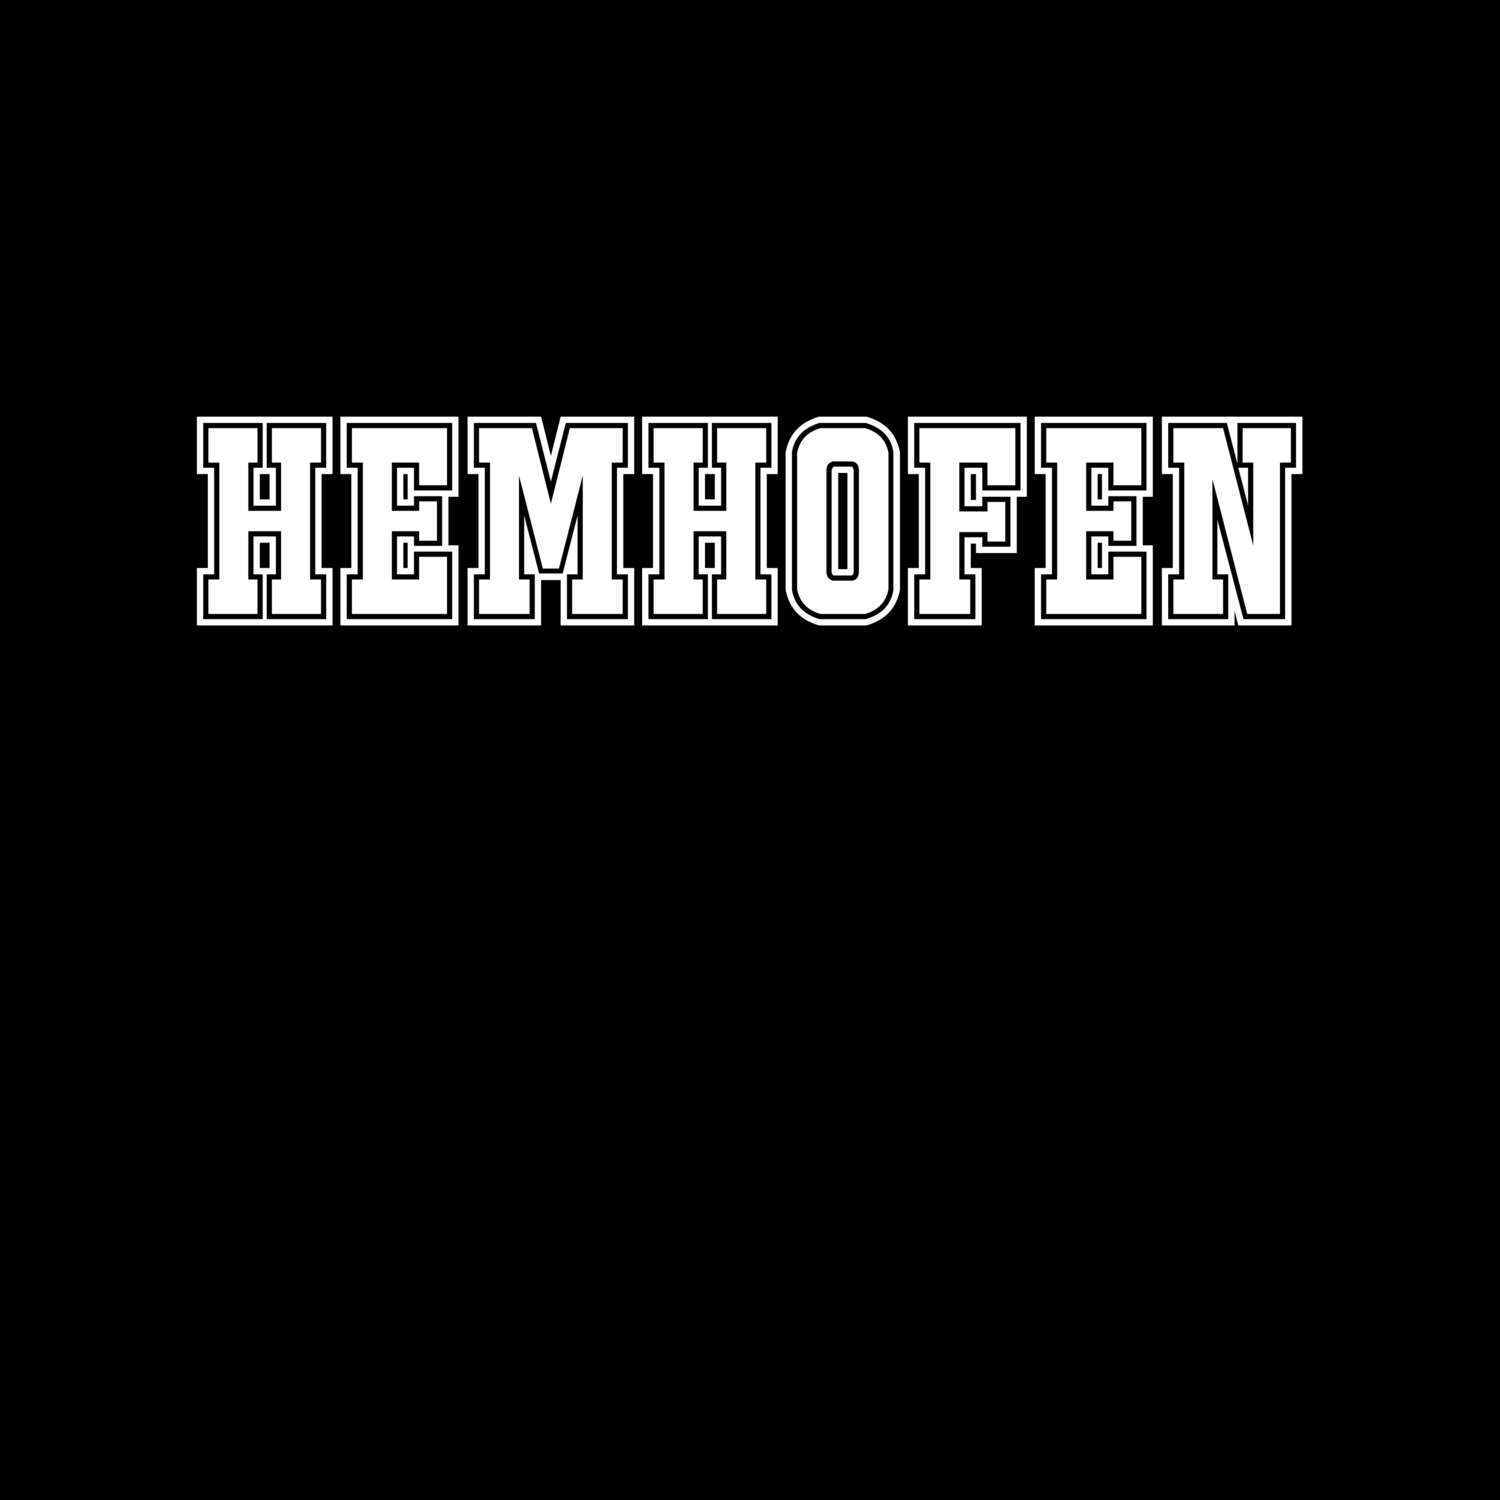 Hemhofen T-Shirt »Classic«